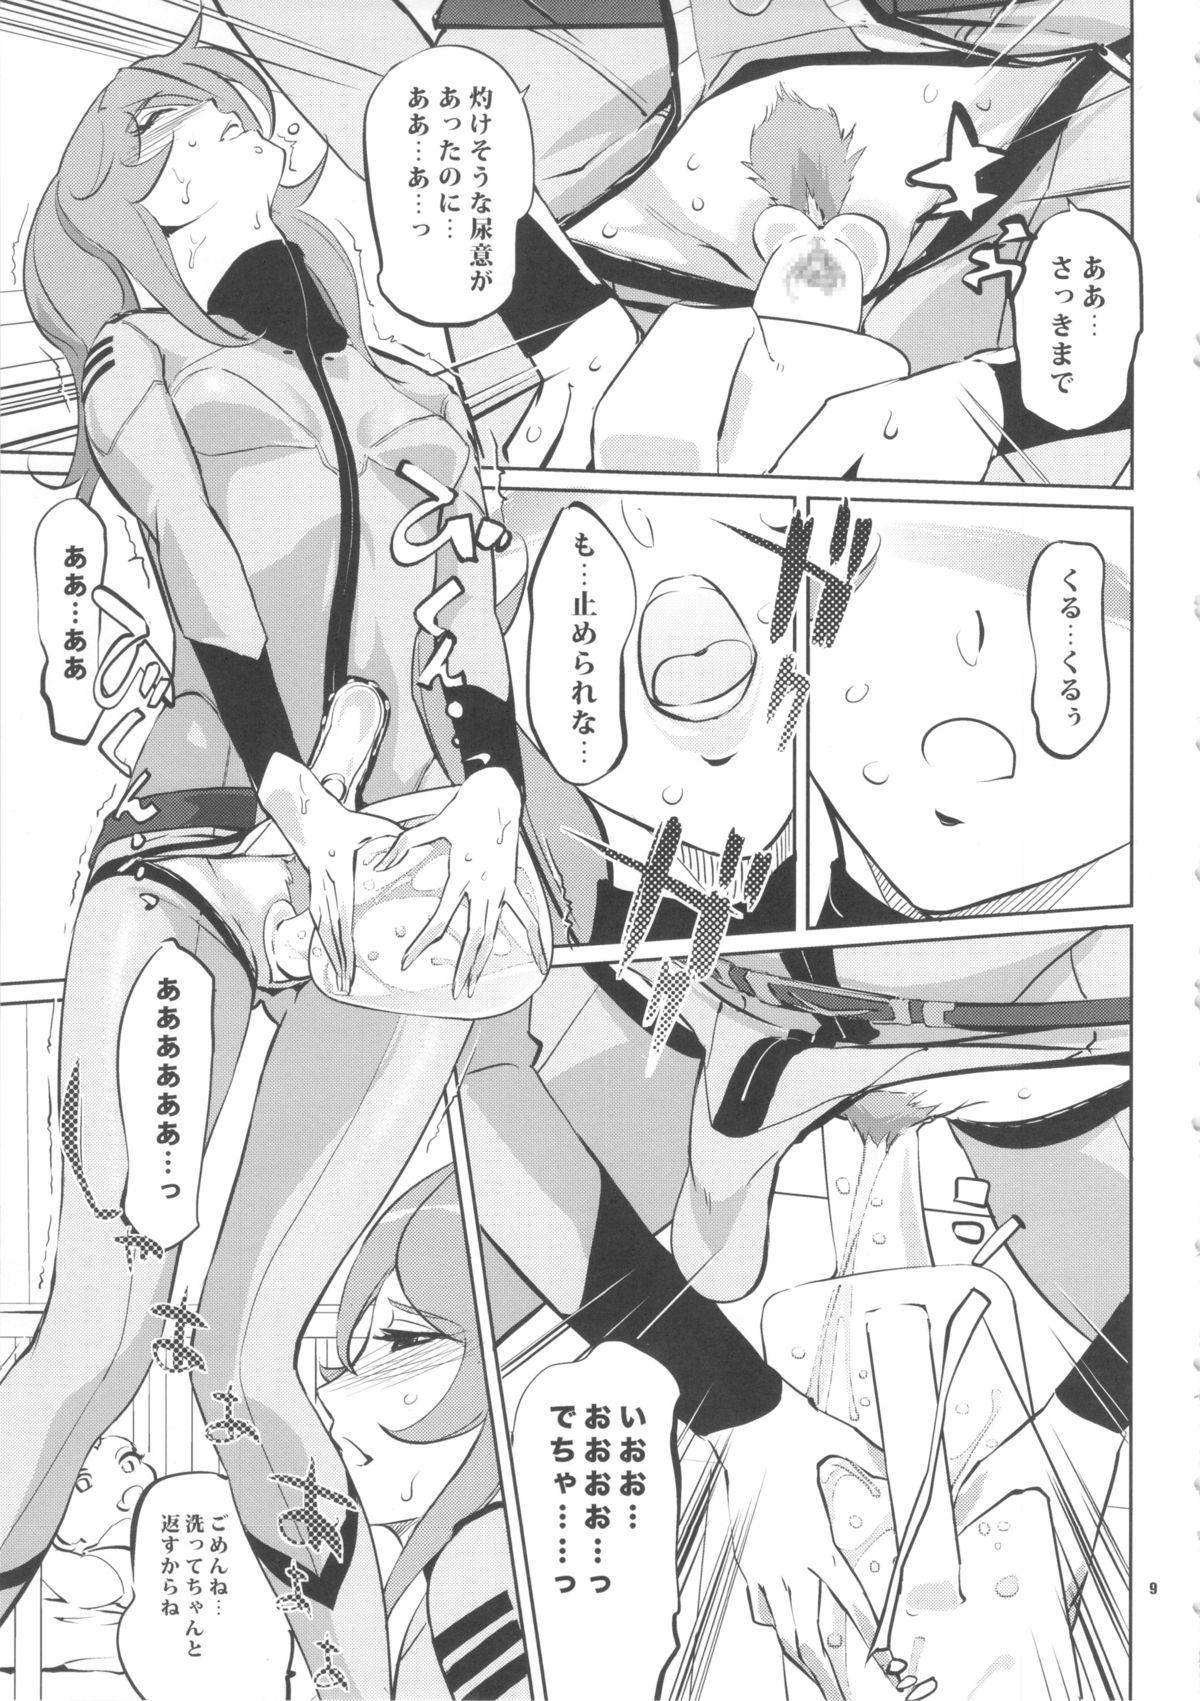 Busty YG-2199 - Space battleship yamato 18 Year Old - Page 8